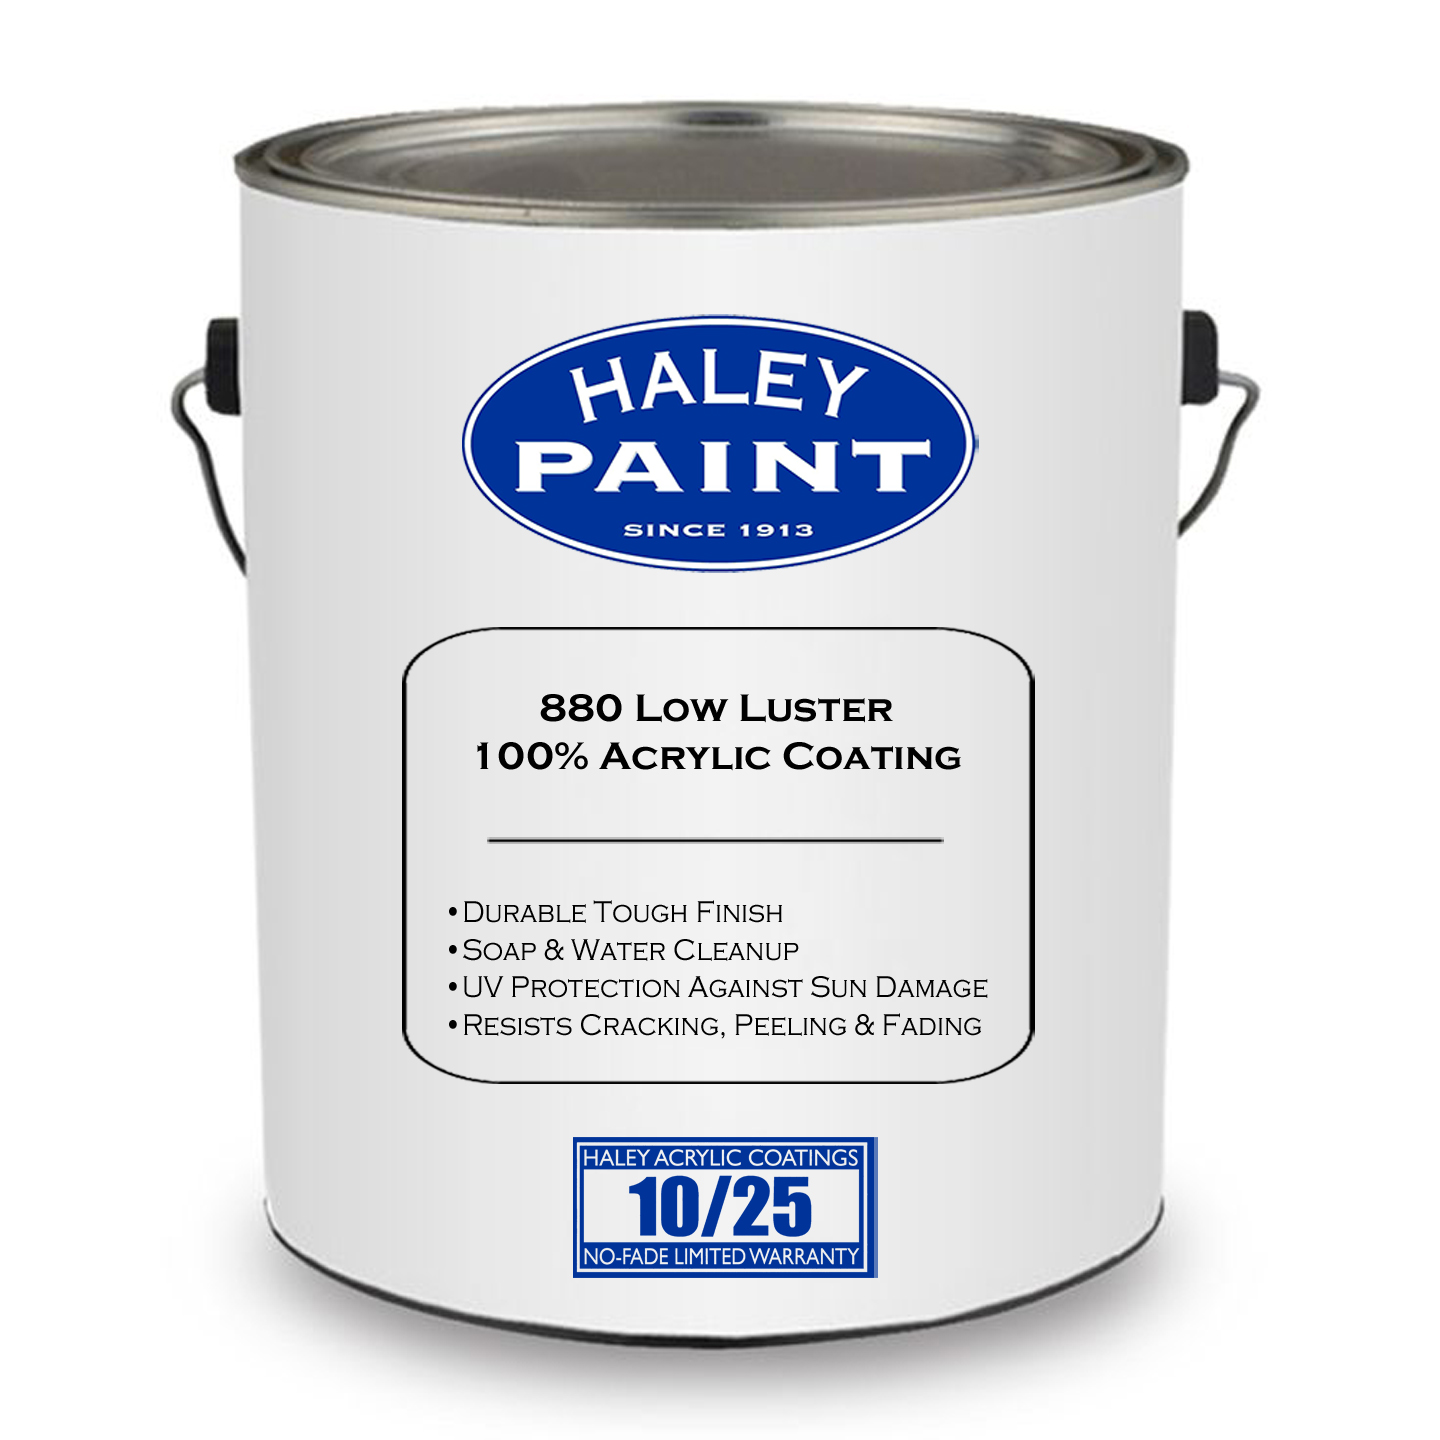 Low Luster Acrylic Paint for Sale - Haley Paint